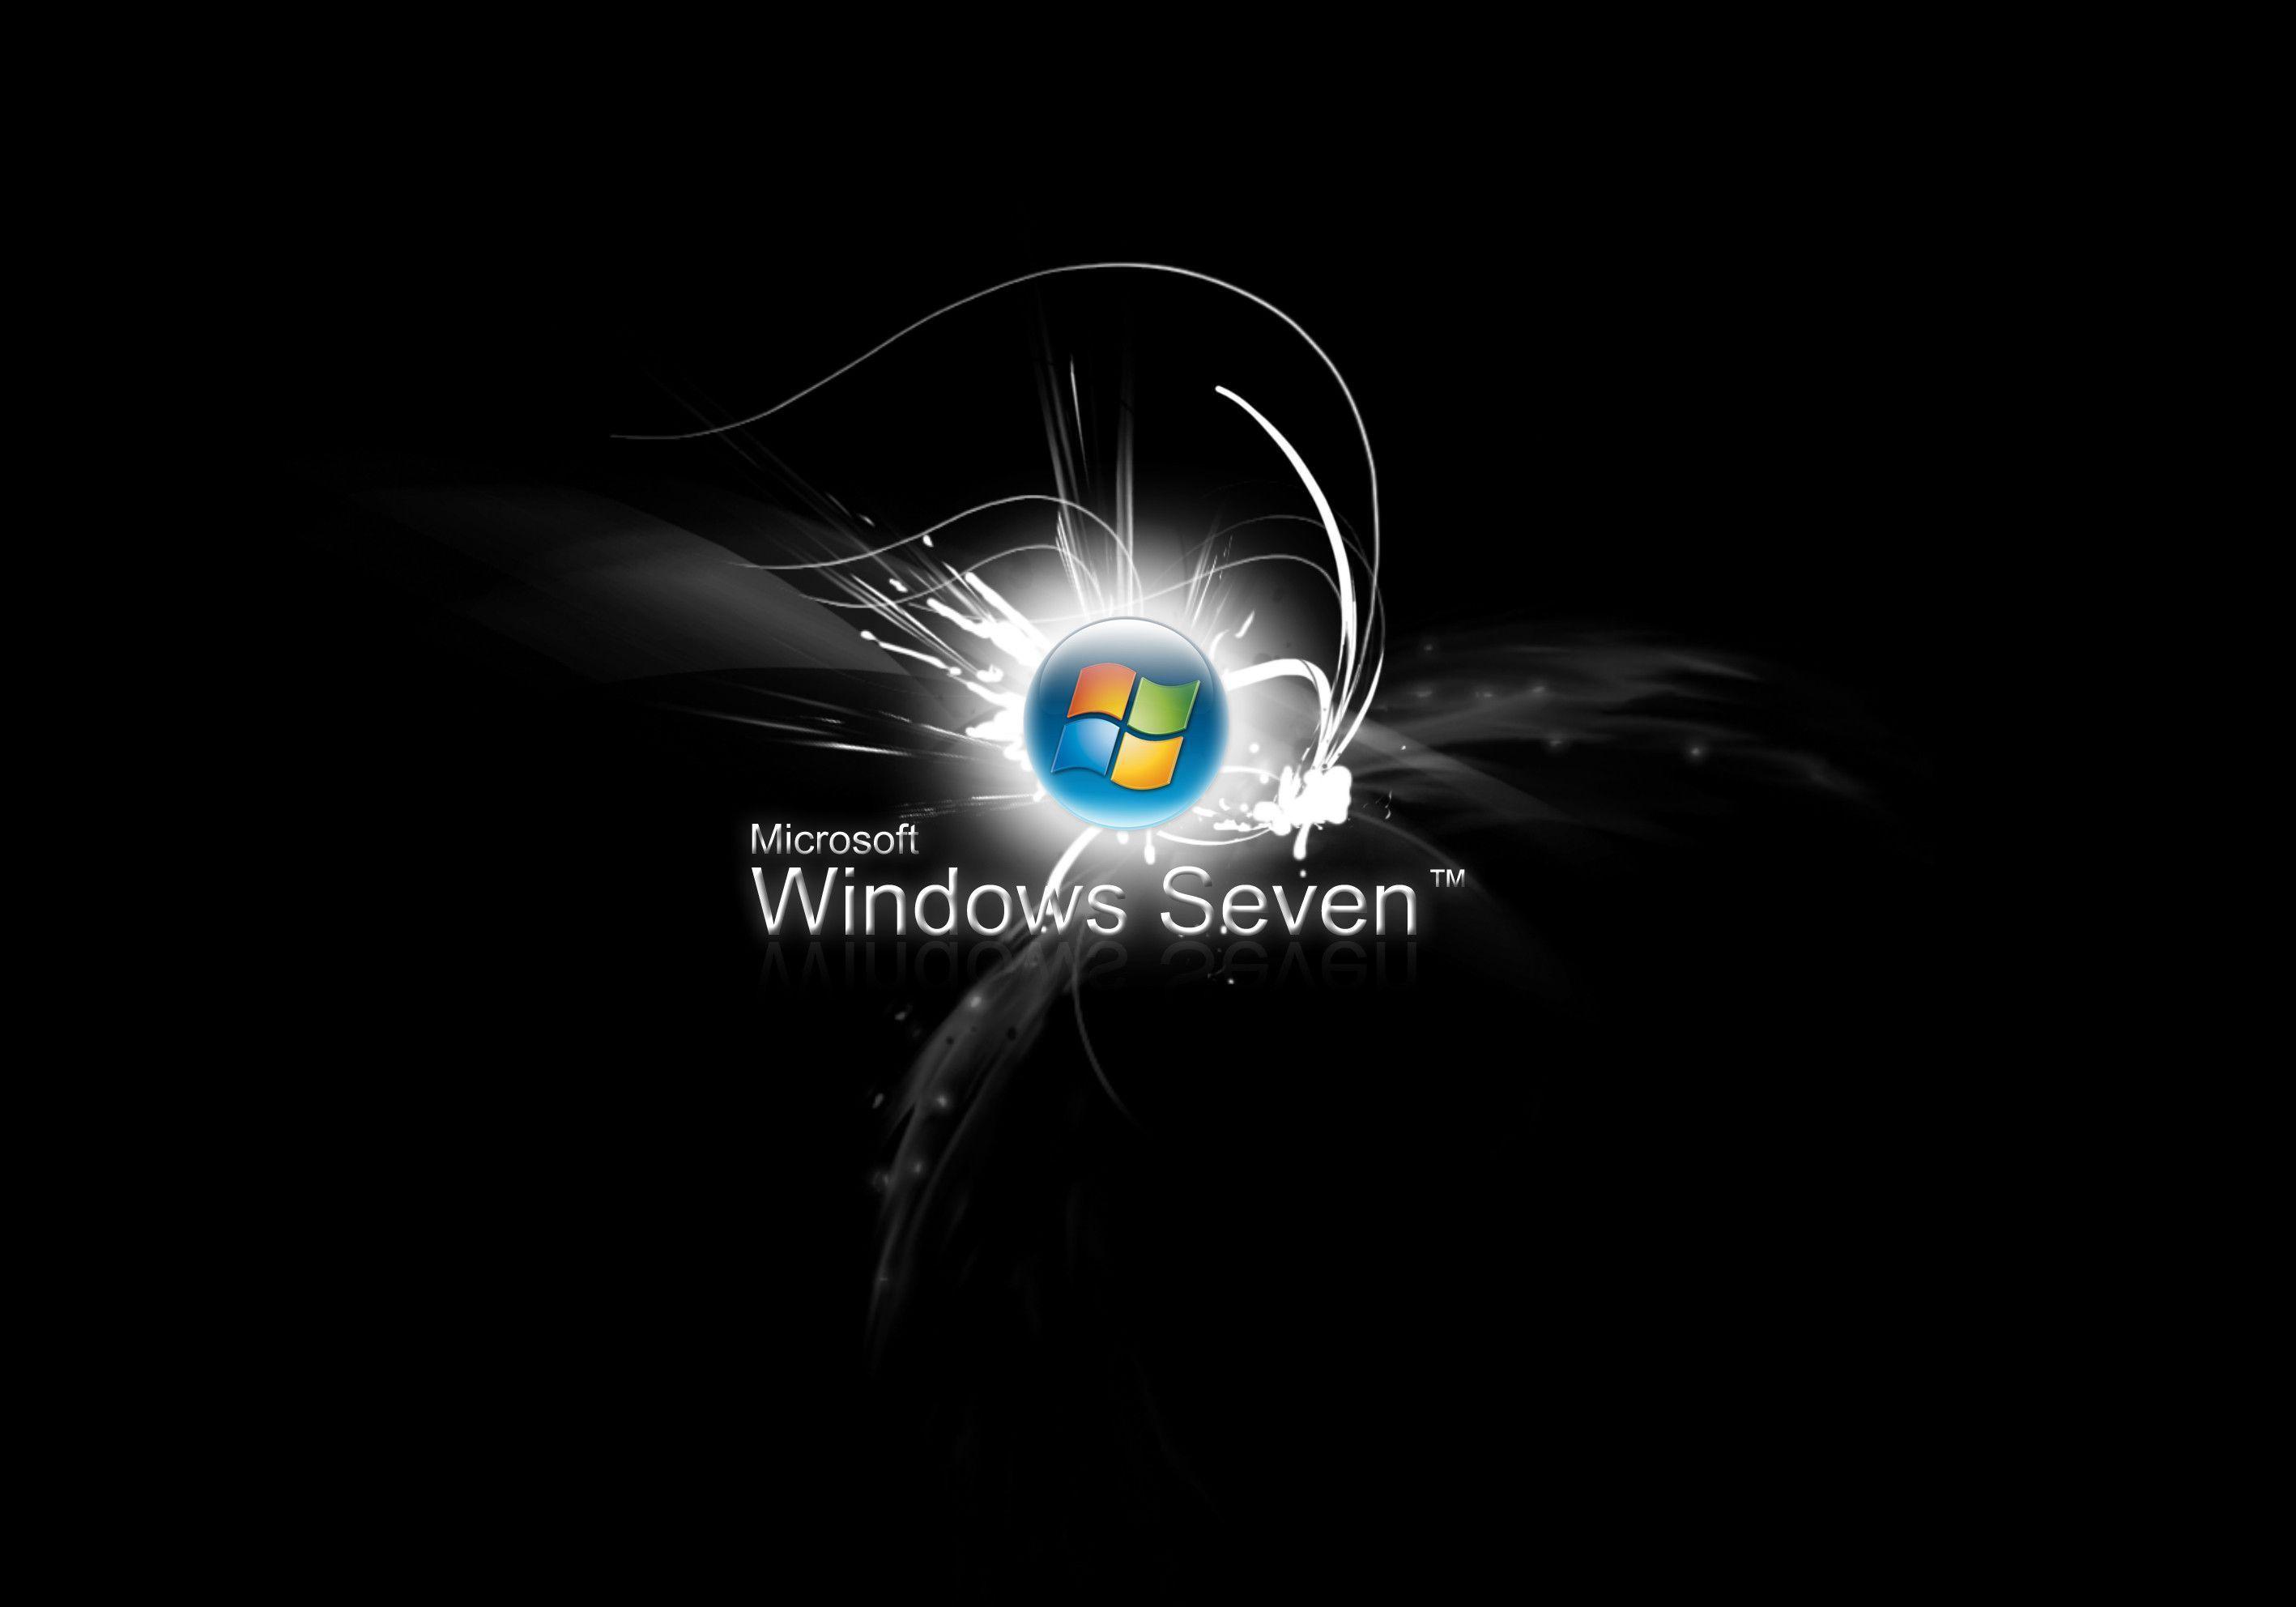 Cool Wallpaper For Desktop For Windows 7 Widescreen 2 HD